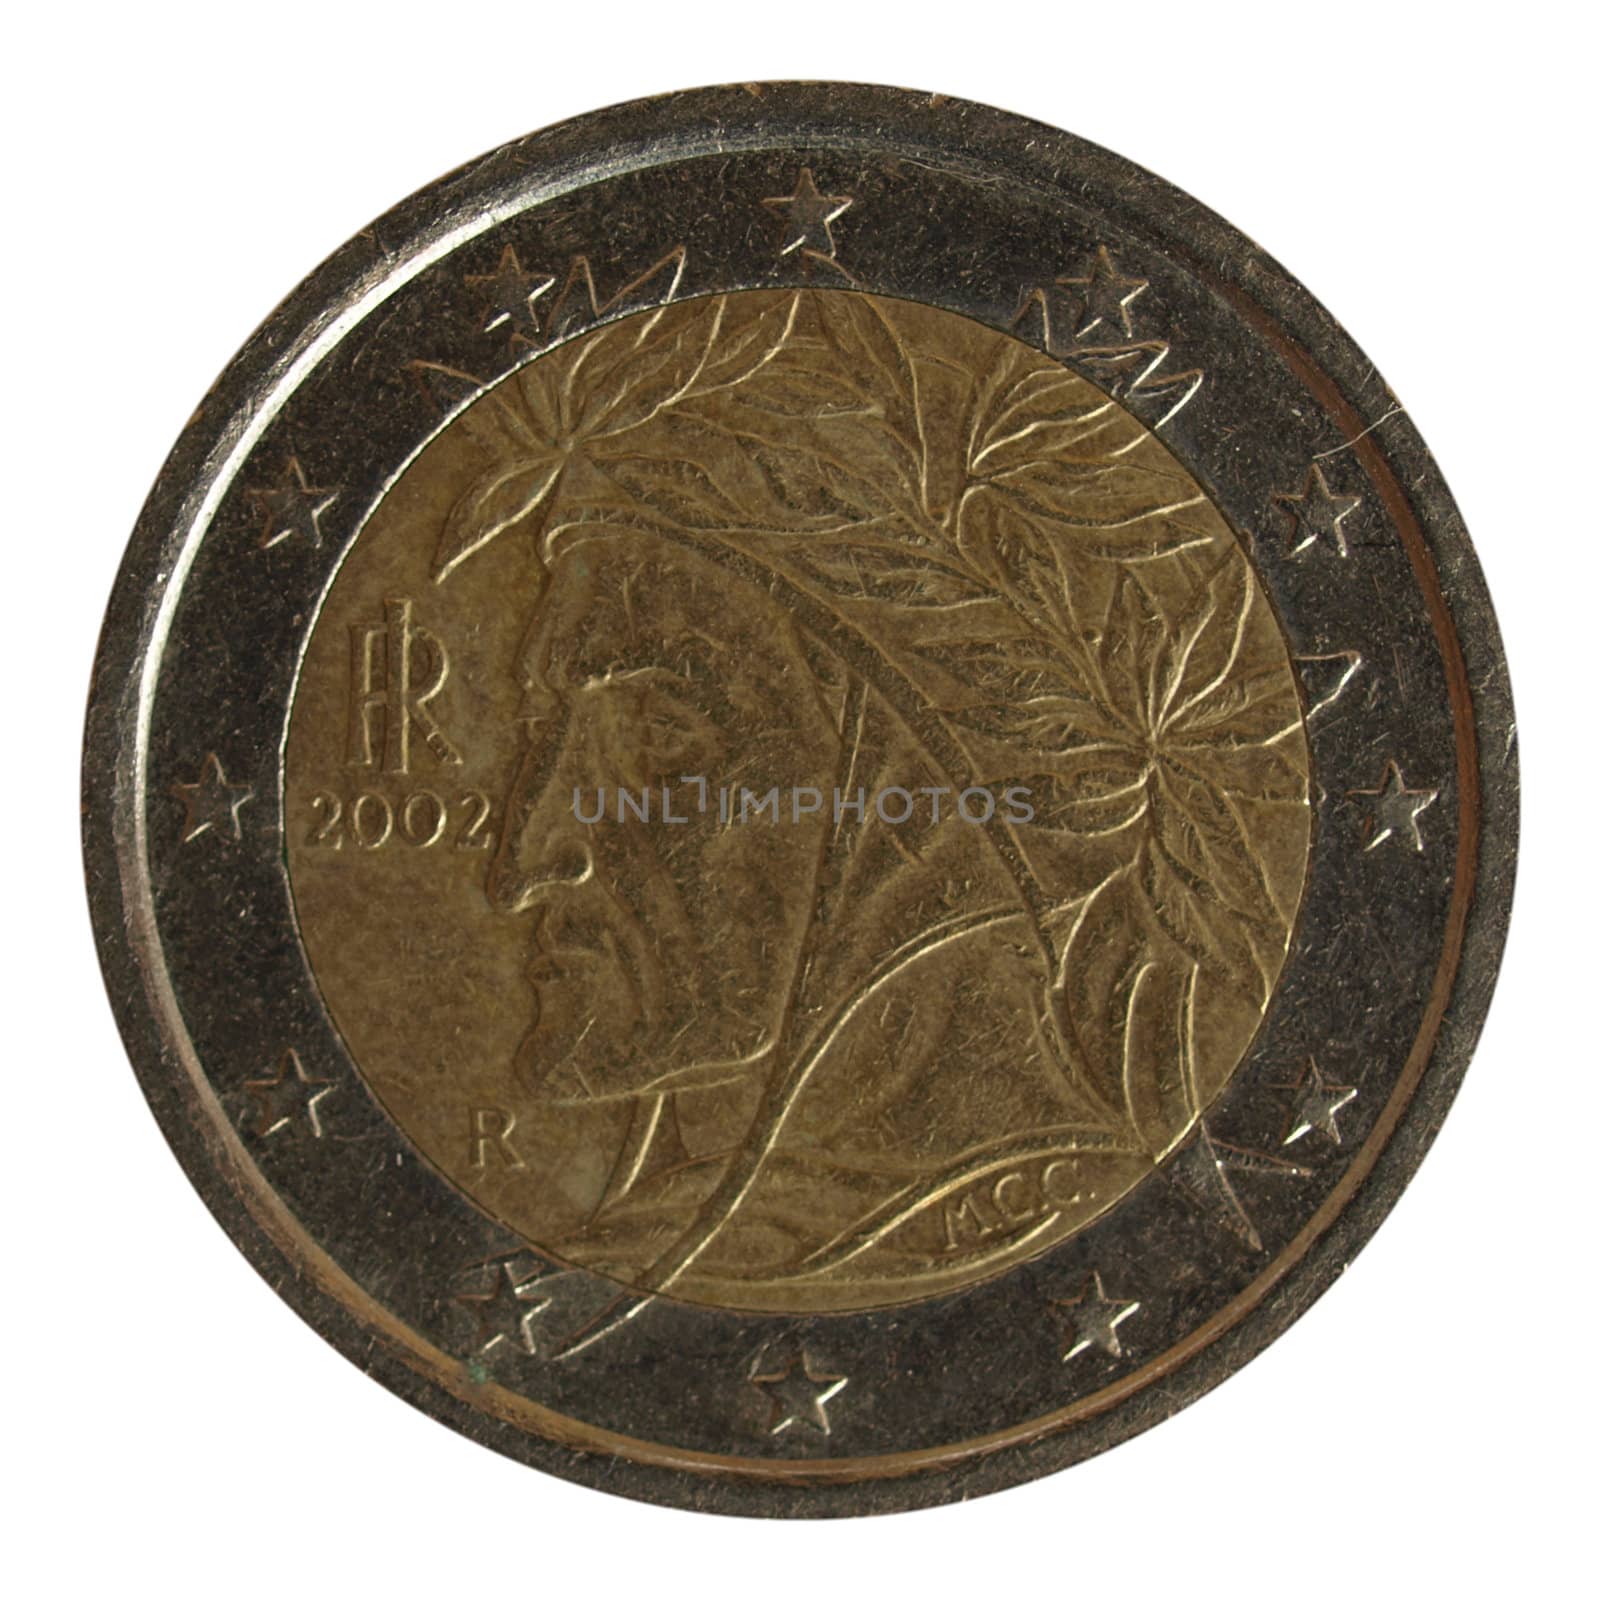 Italian Two Euros coin money with Dante Alighieri